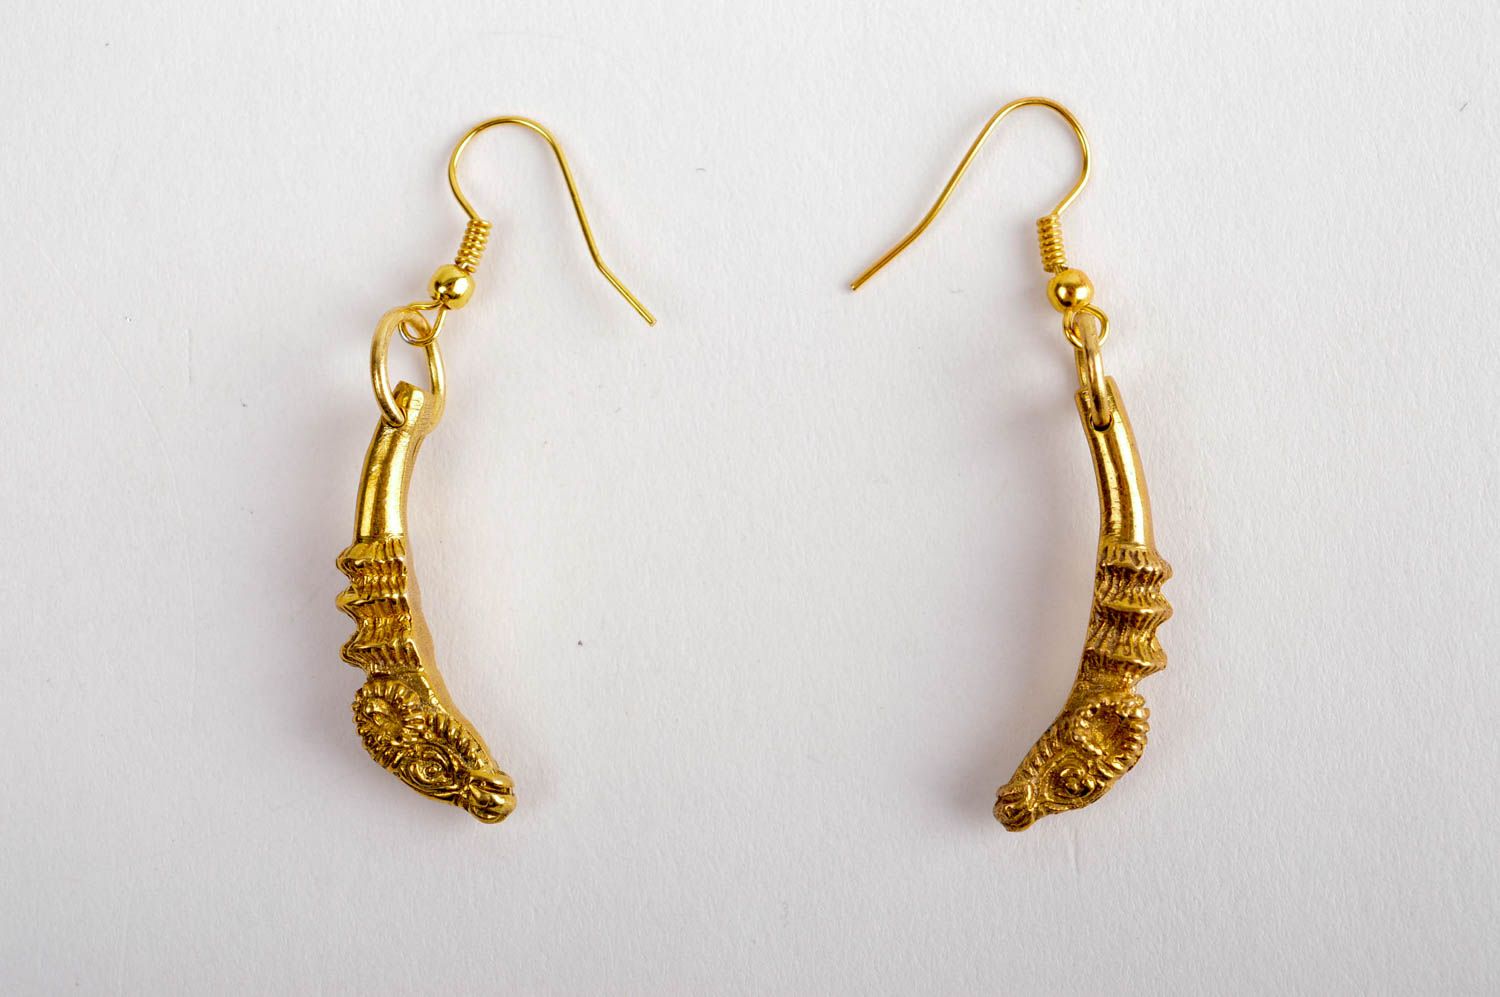 Handmade metal earrings cool earrings design fashion accessories for girls photo 3